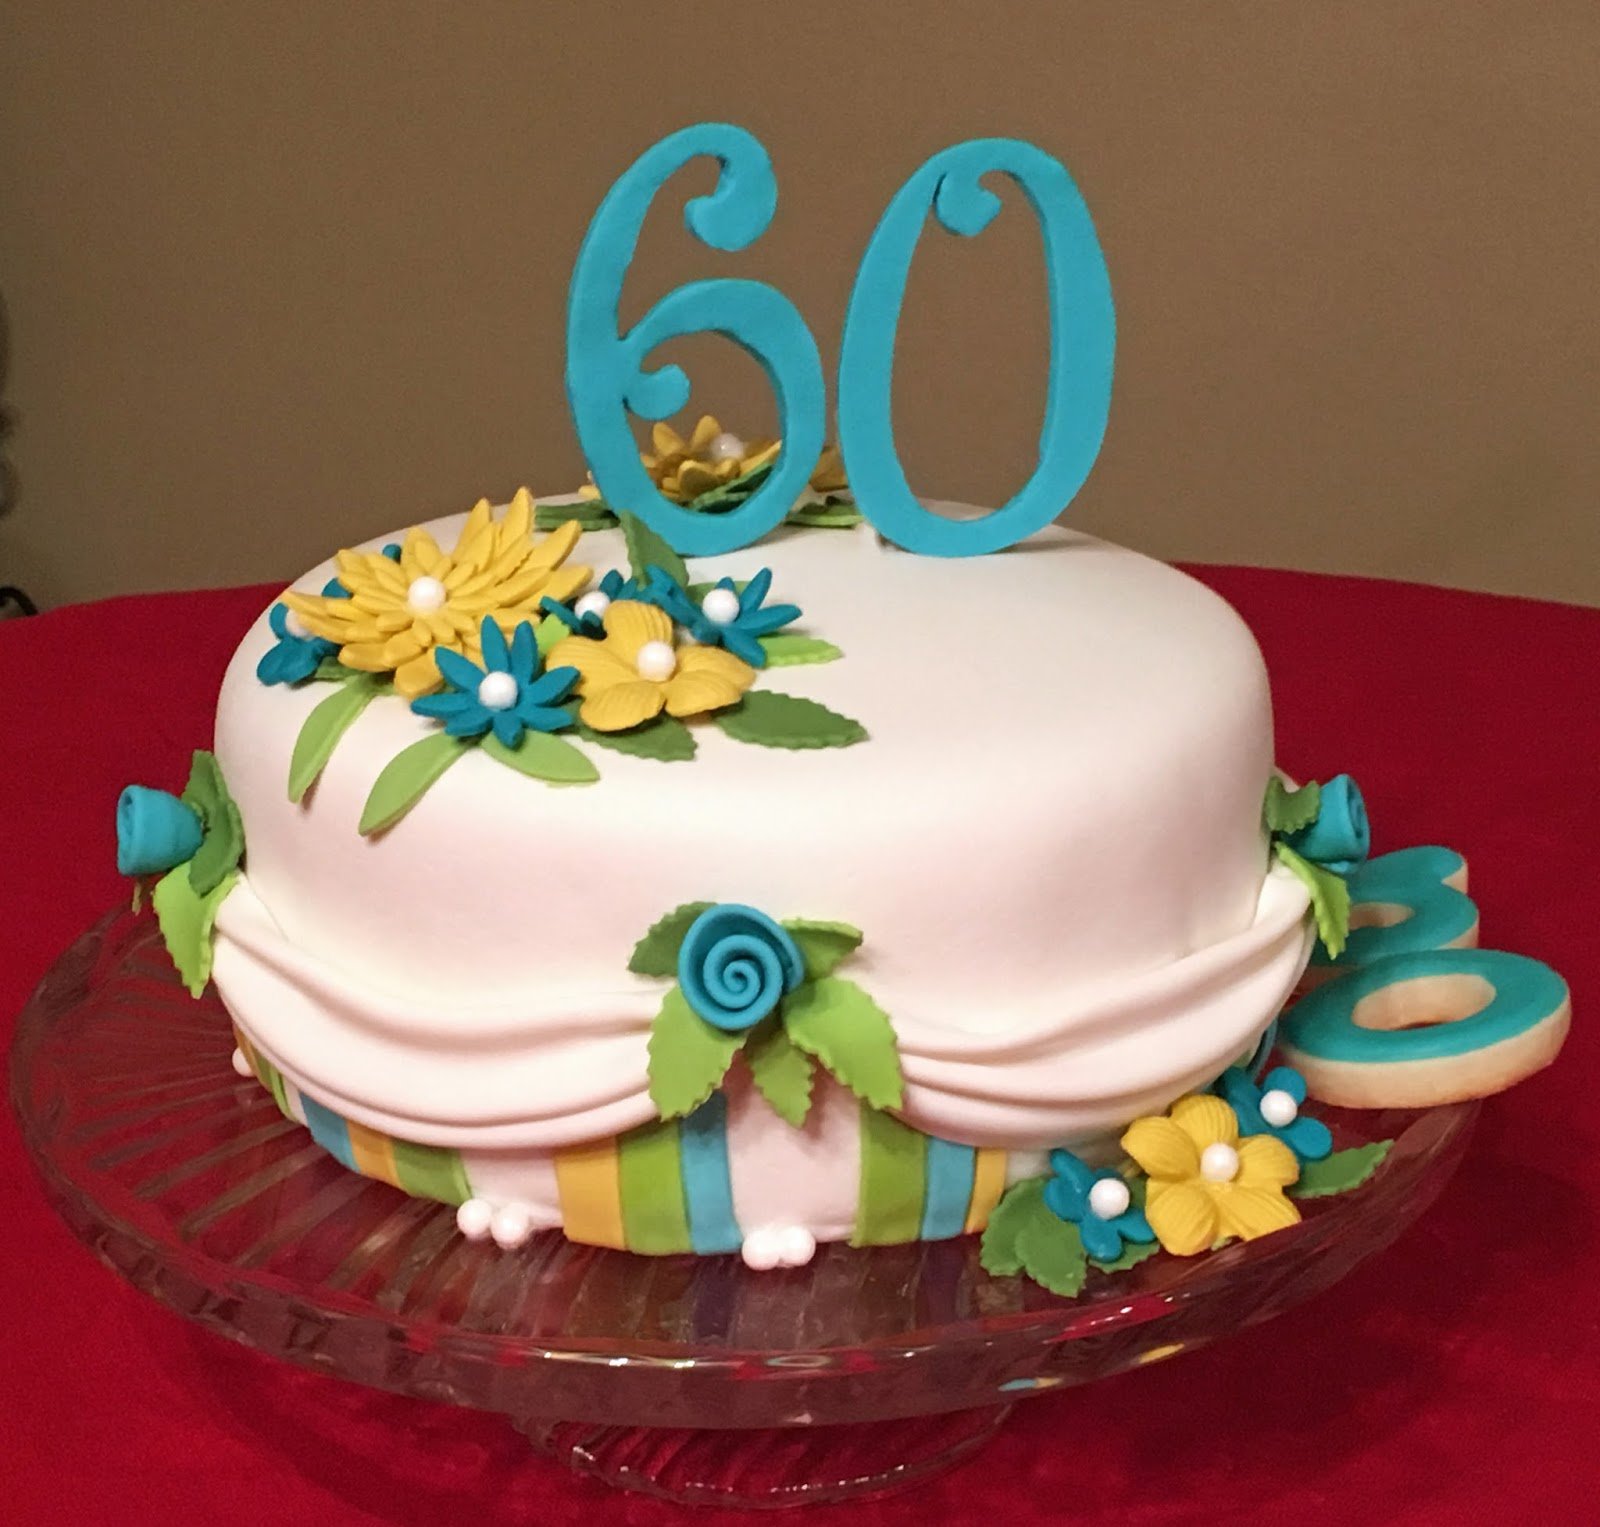 The Bake More: 60th Birthday Cake